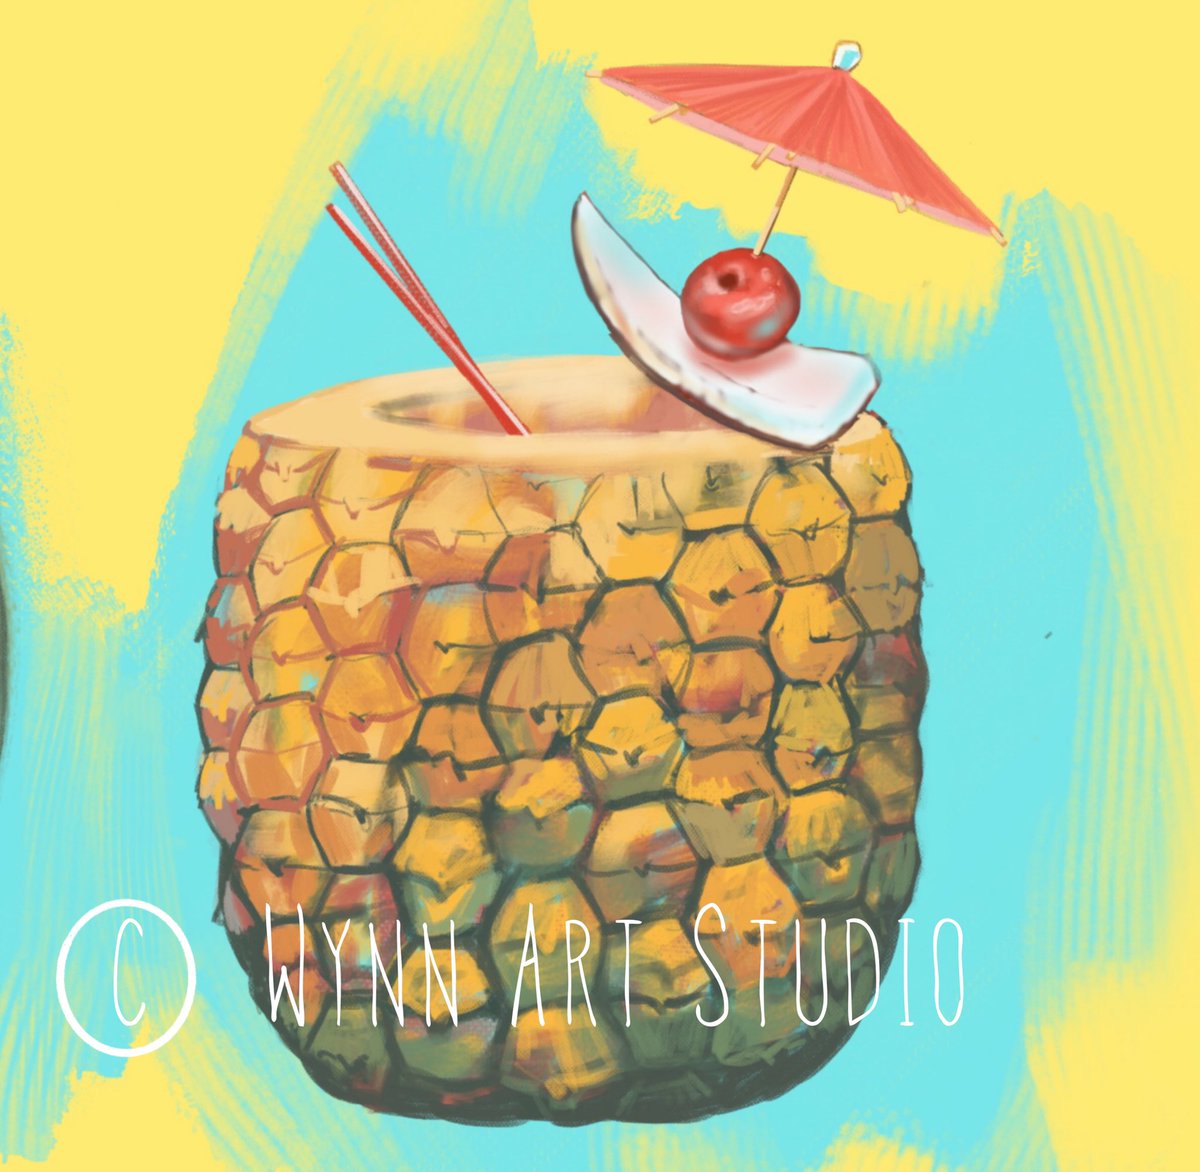 I was working on this today... almost Done! 
#wynnartstudio #pineappledrink #tropicaldrinks #digitalpainting #beverageillustration #illustrator